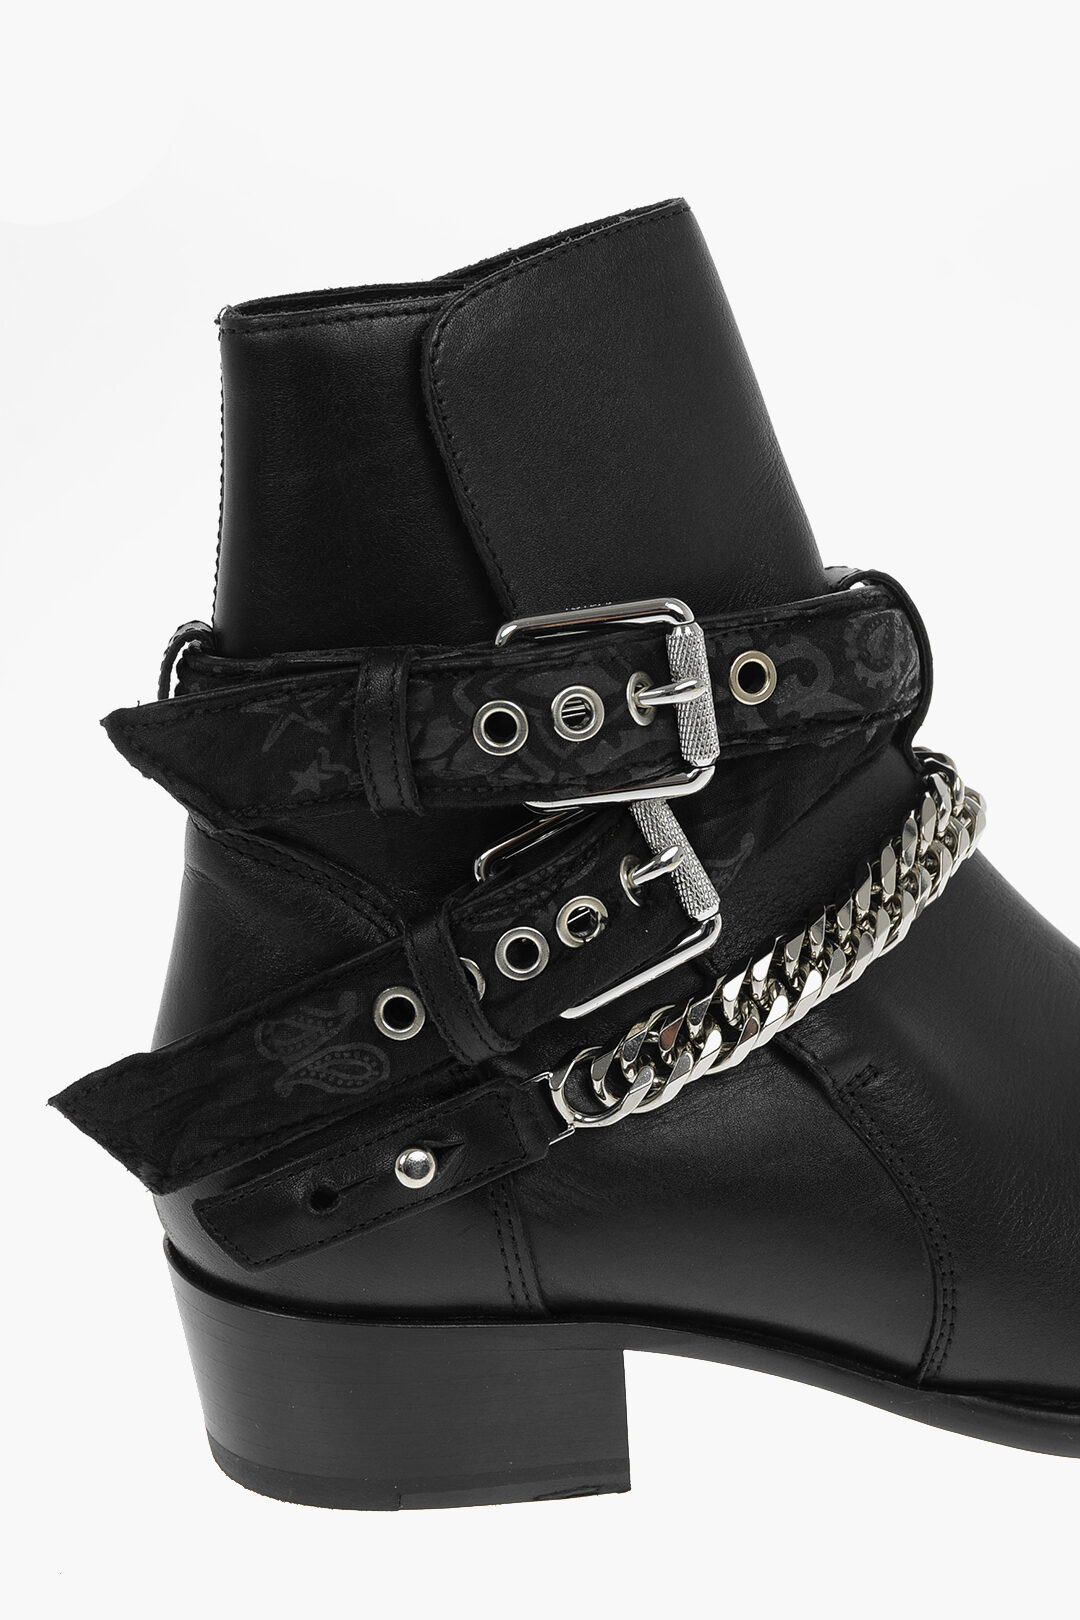 Amiri Leather BANDANA Boots With Straps men - Glamood Outlet